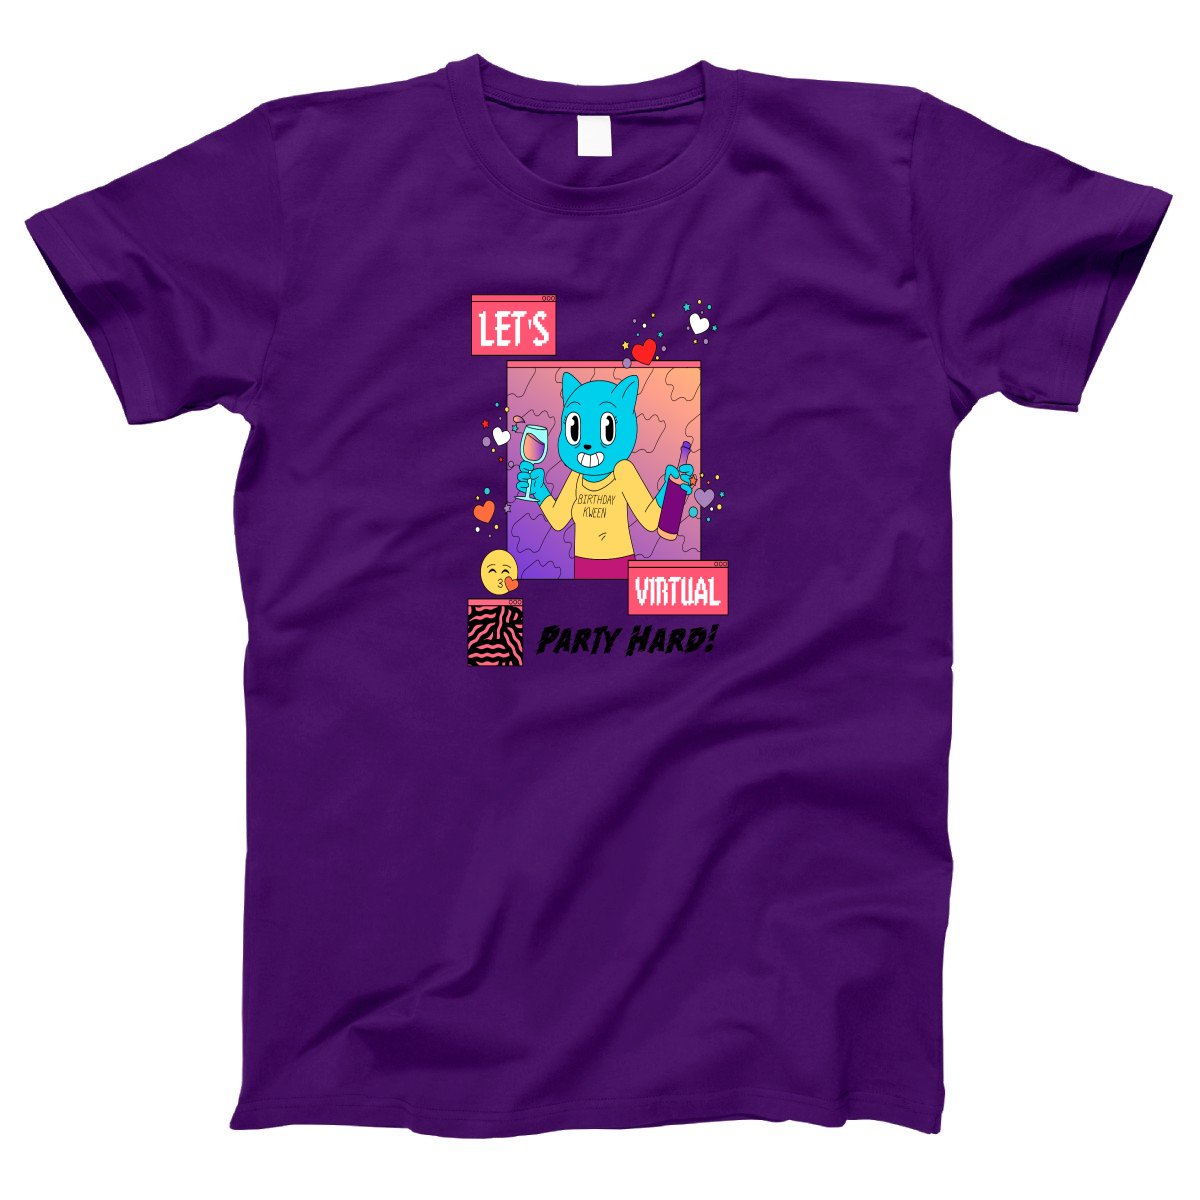 Let's Virtual Party Hard Women's T-shirt | Purple